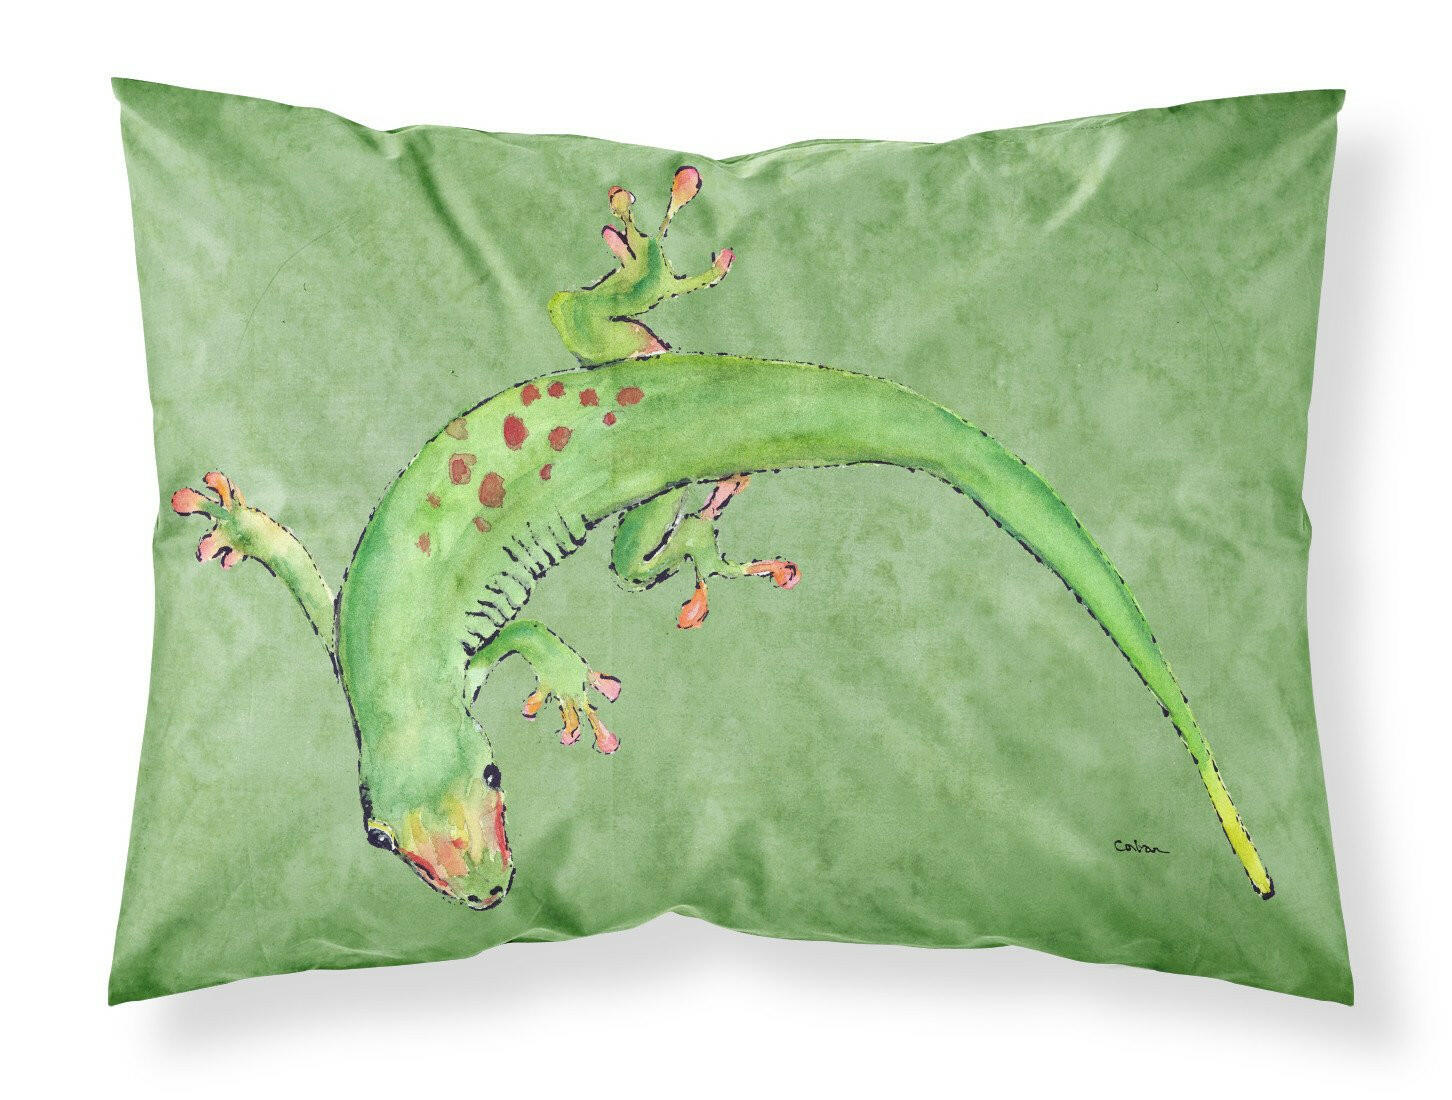 Gecko Moisture wicking Fabric standard pillowcase by Caroline's Treasures